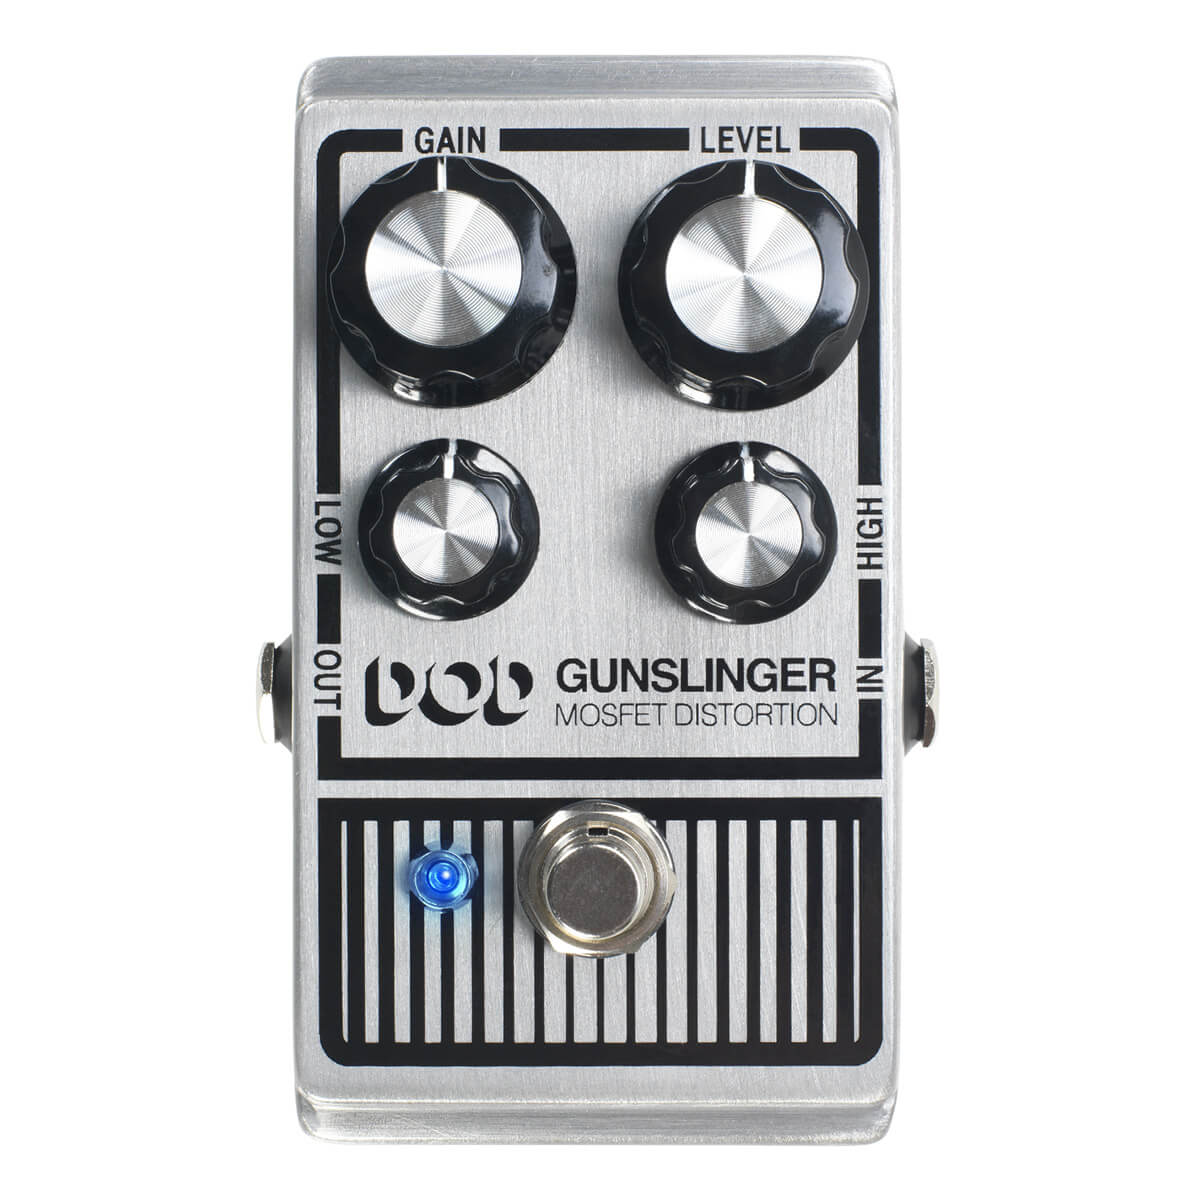 DOD-Gunslinger-Guitar-Pedal-Top-1200x1200-1